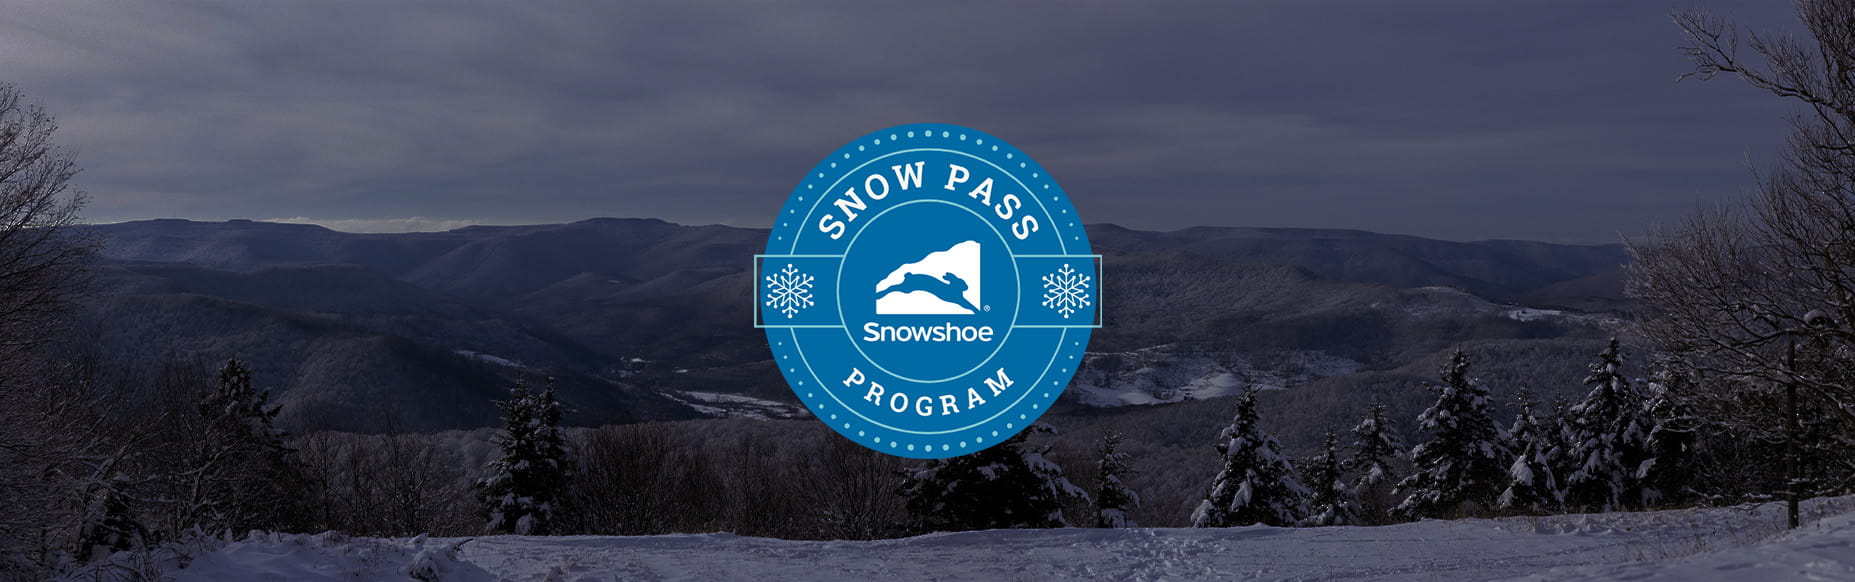 Snow Pass Program at Snowshoe Mountain Resort